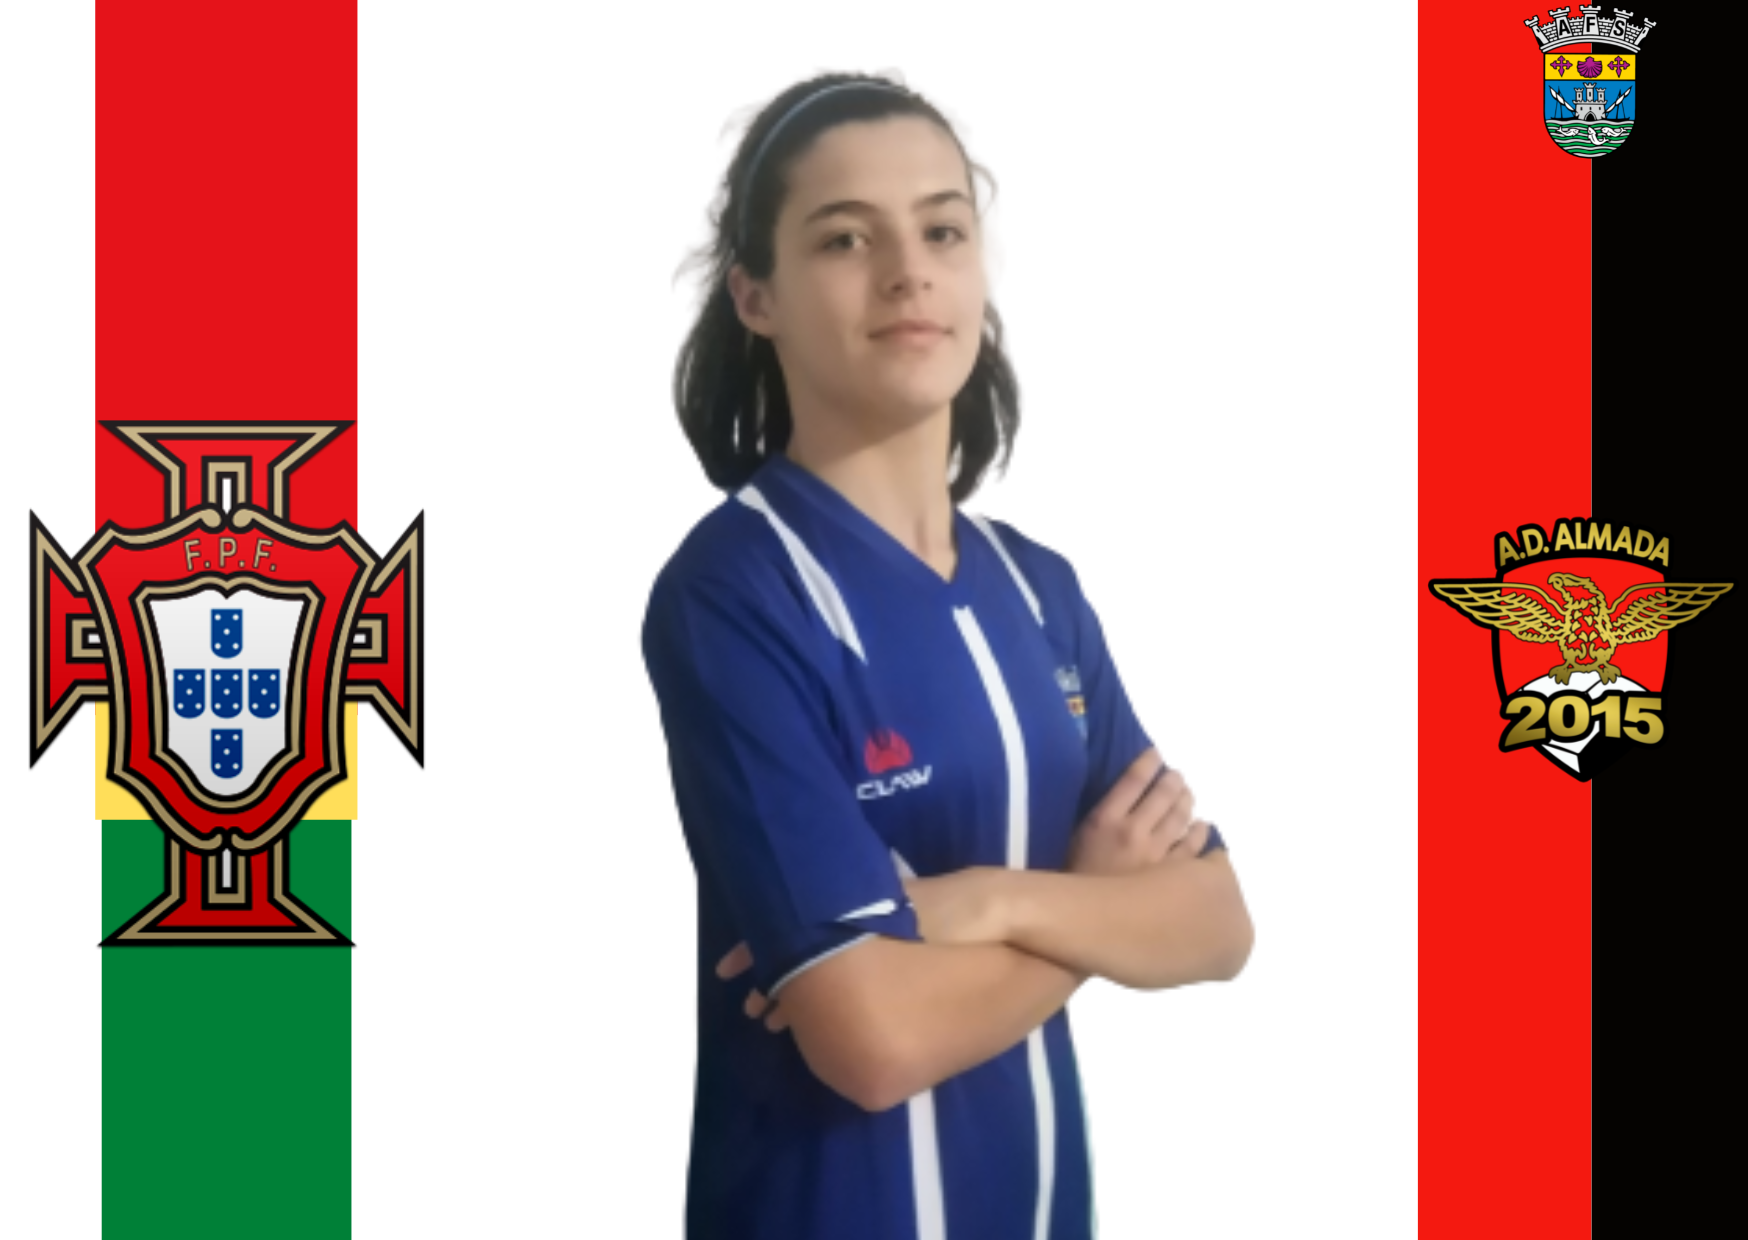 Ana Fonseca (AD Almada 2015) regressa à seleção nacional